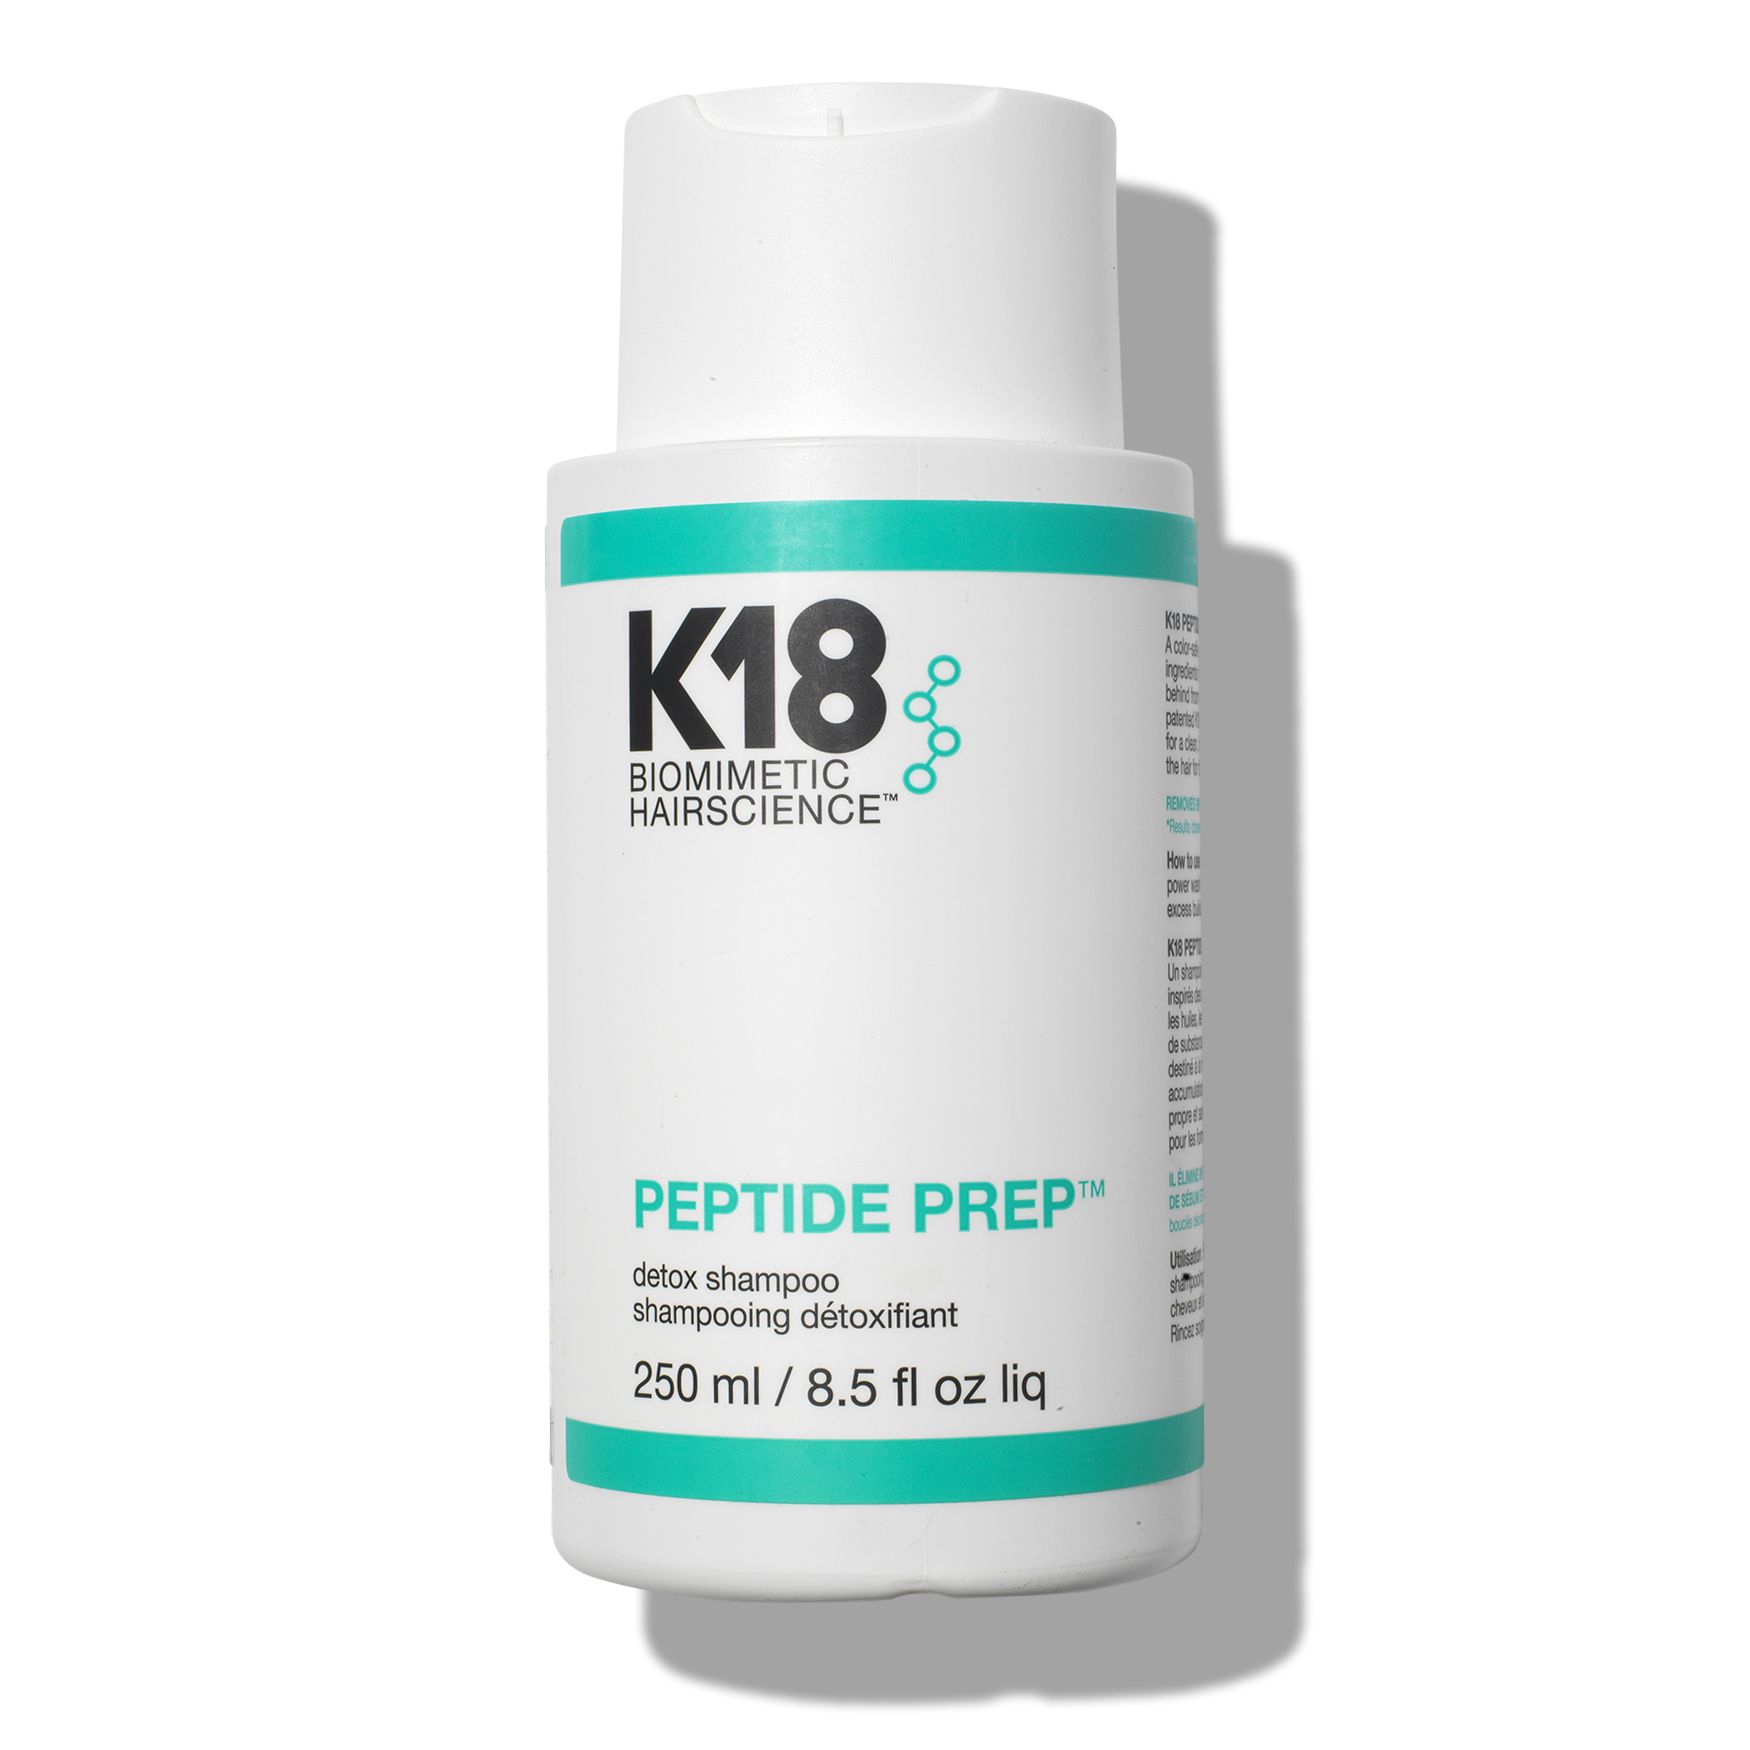 PEPTIDE PREP™ detox shampoo | Space NK - UK